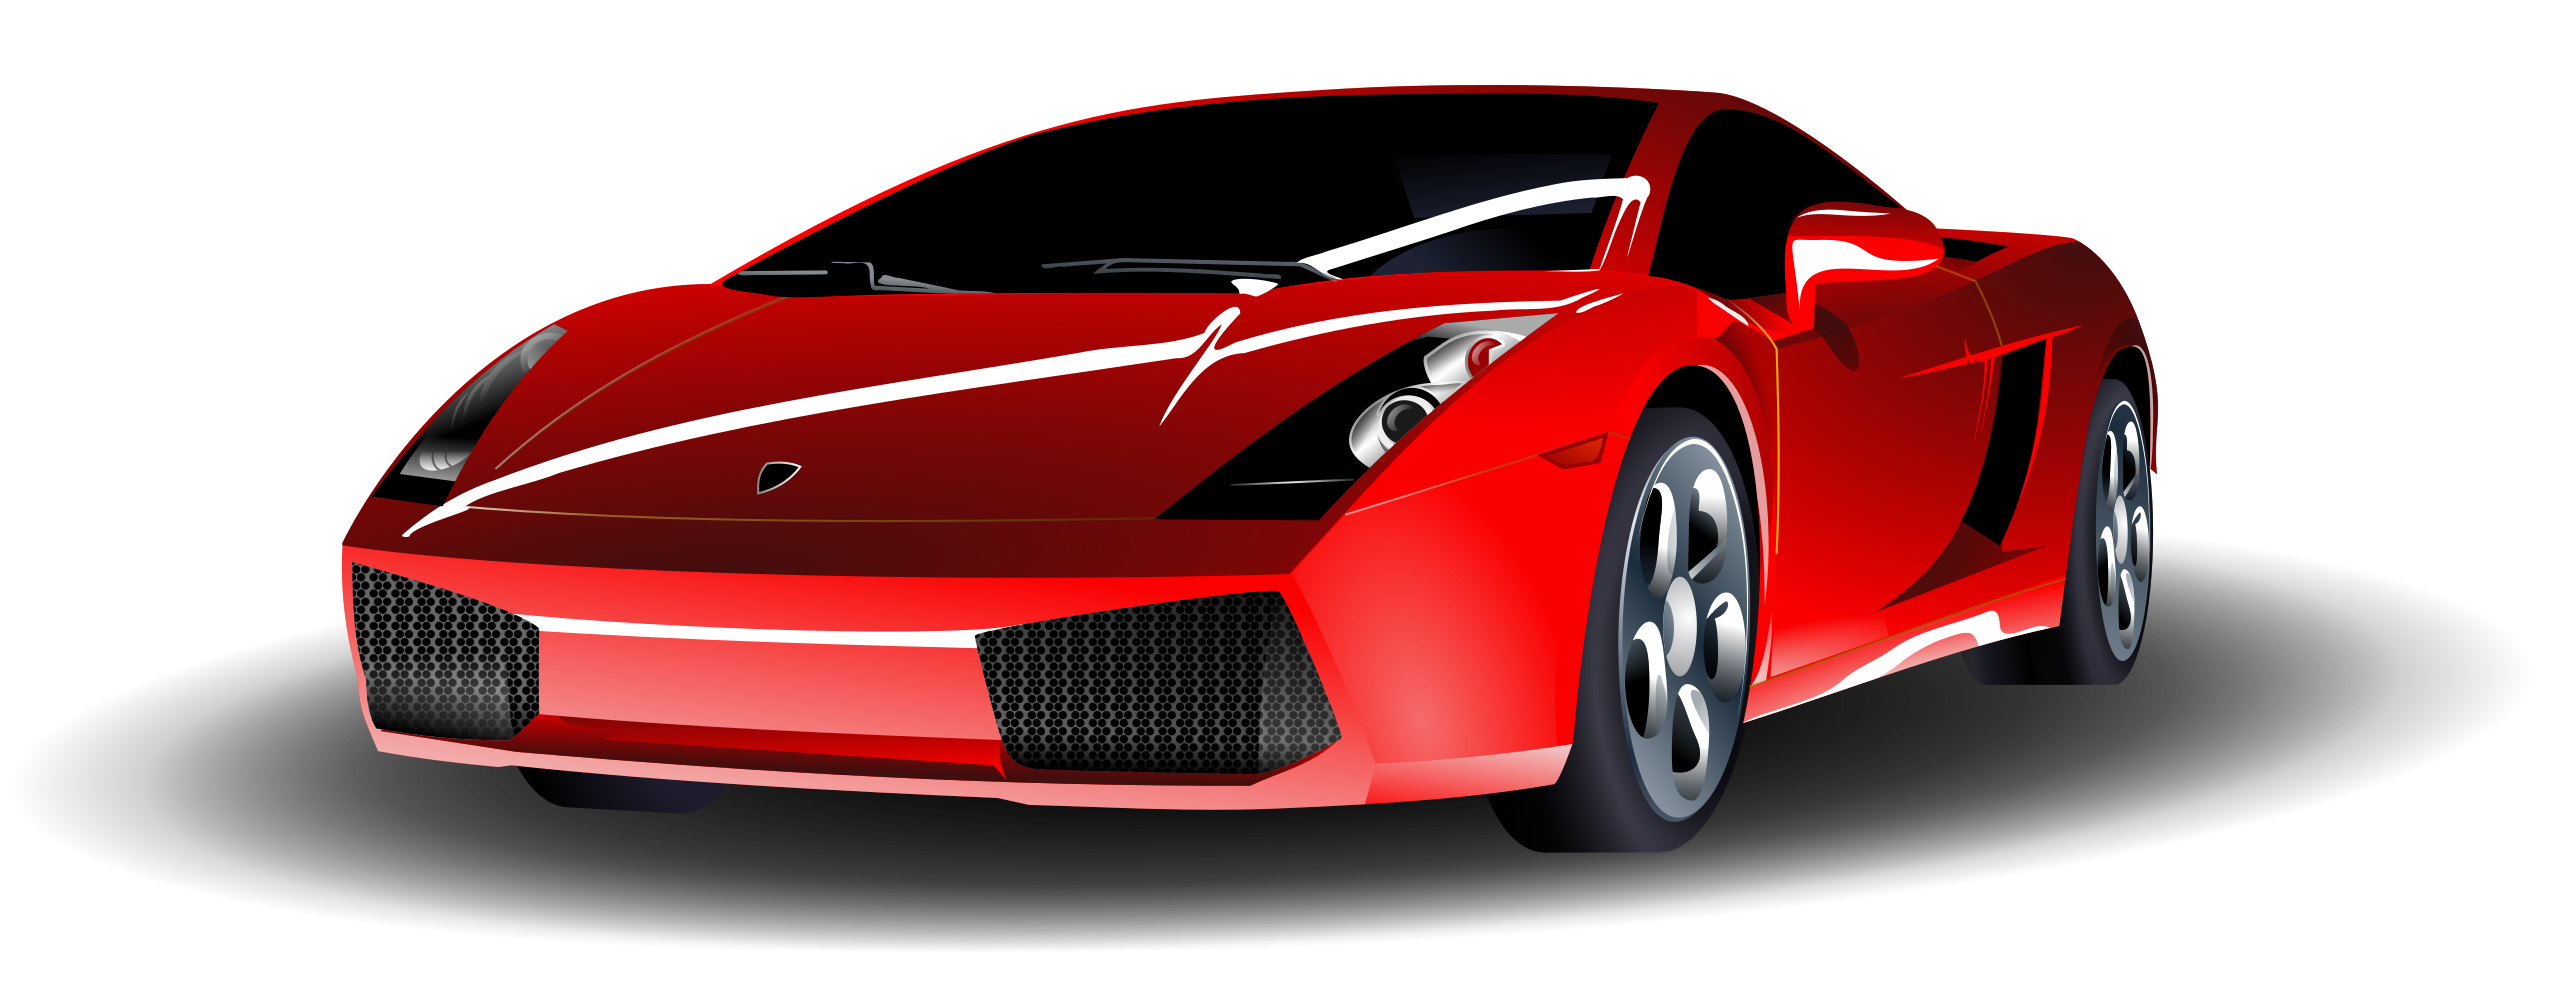 File:Red Lamborghini.svg - Wikimedia Commons